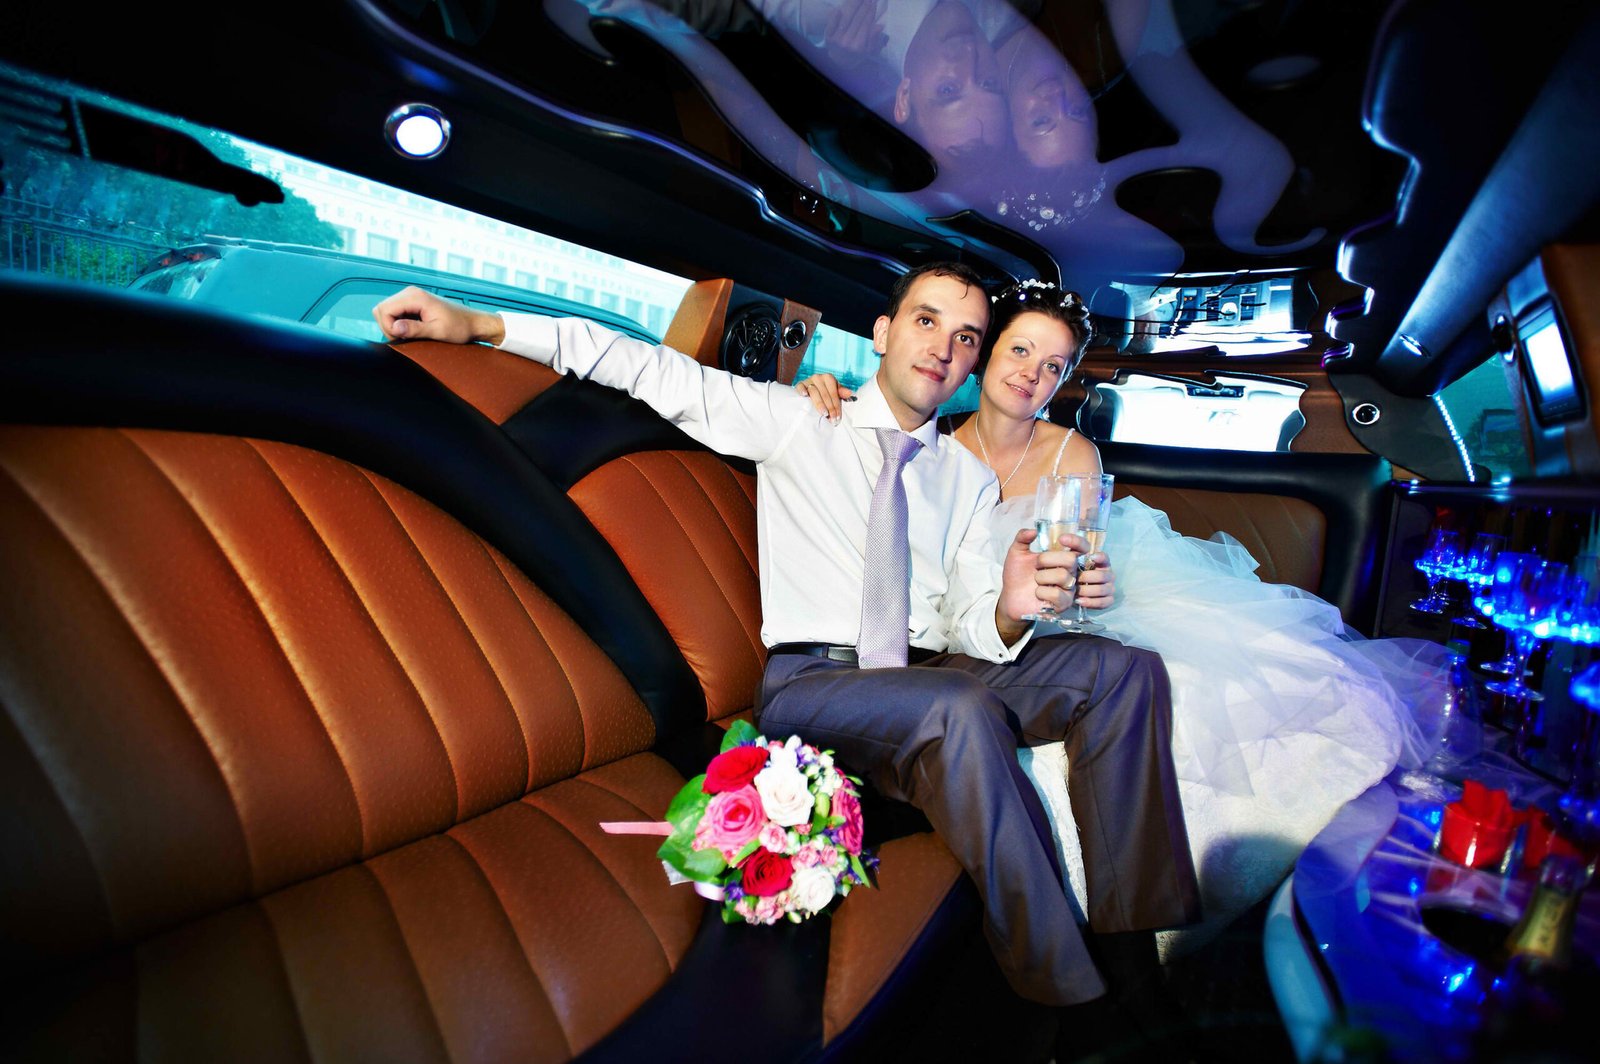 bigstock-Bride-And-Groom-In-Wedding-Lim-65622085-scaled.jpg